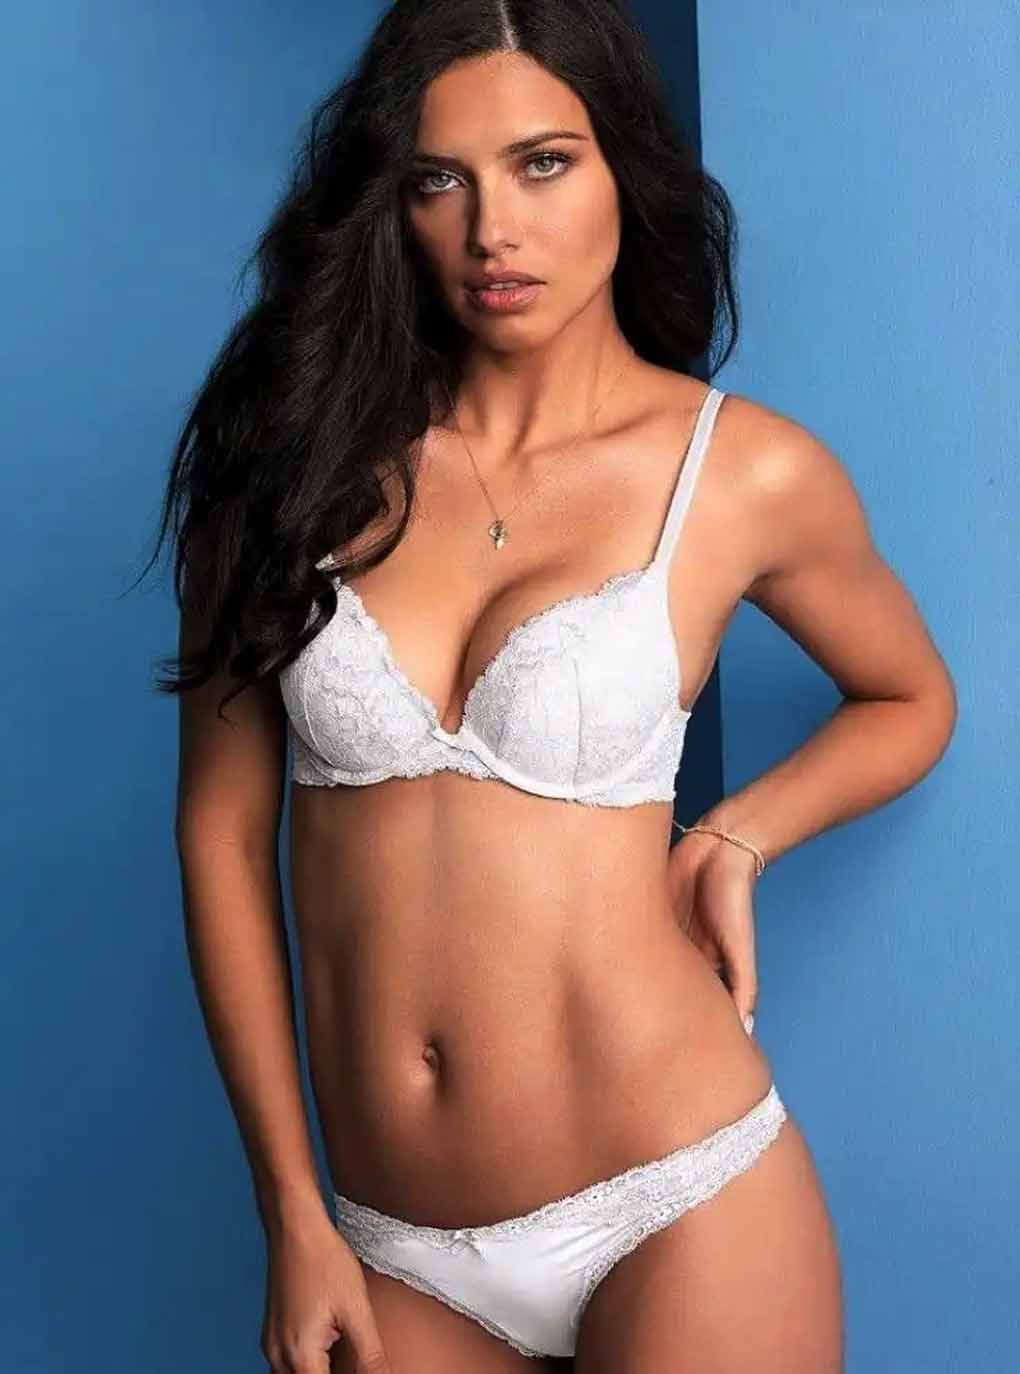 Adriana Lima age